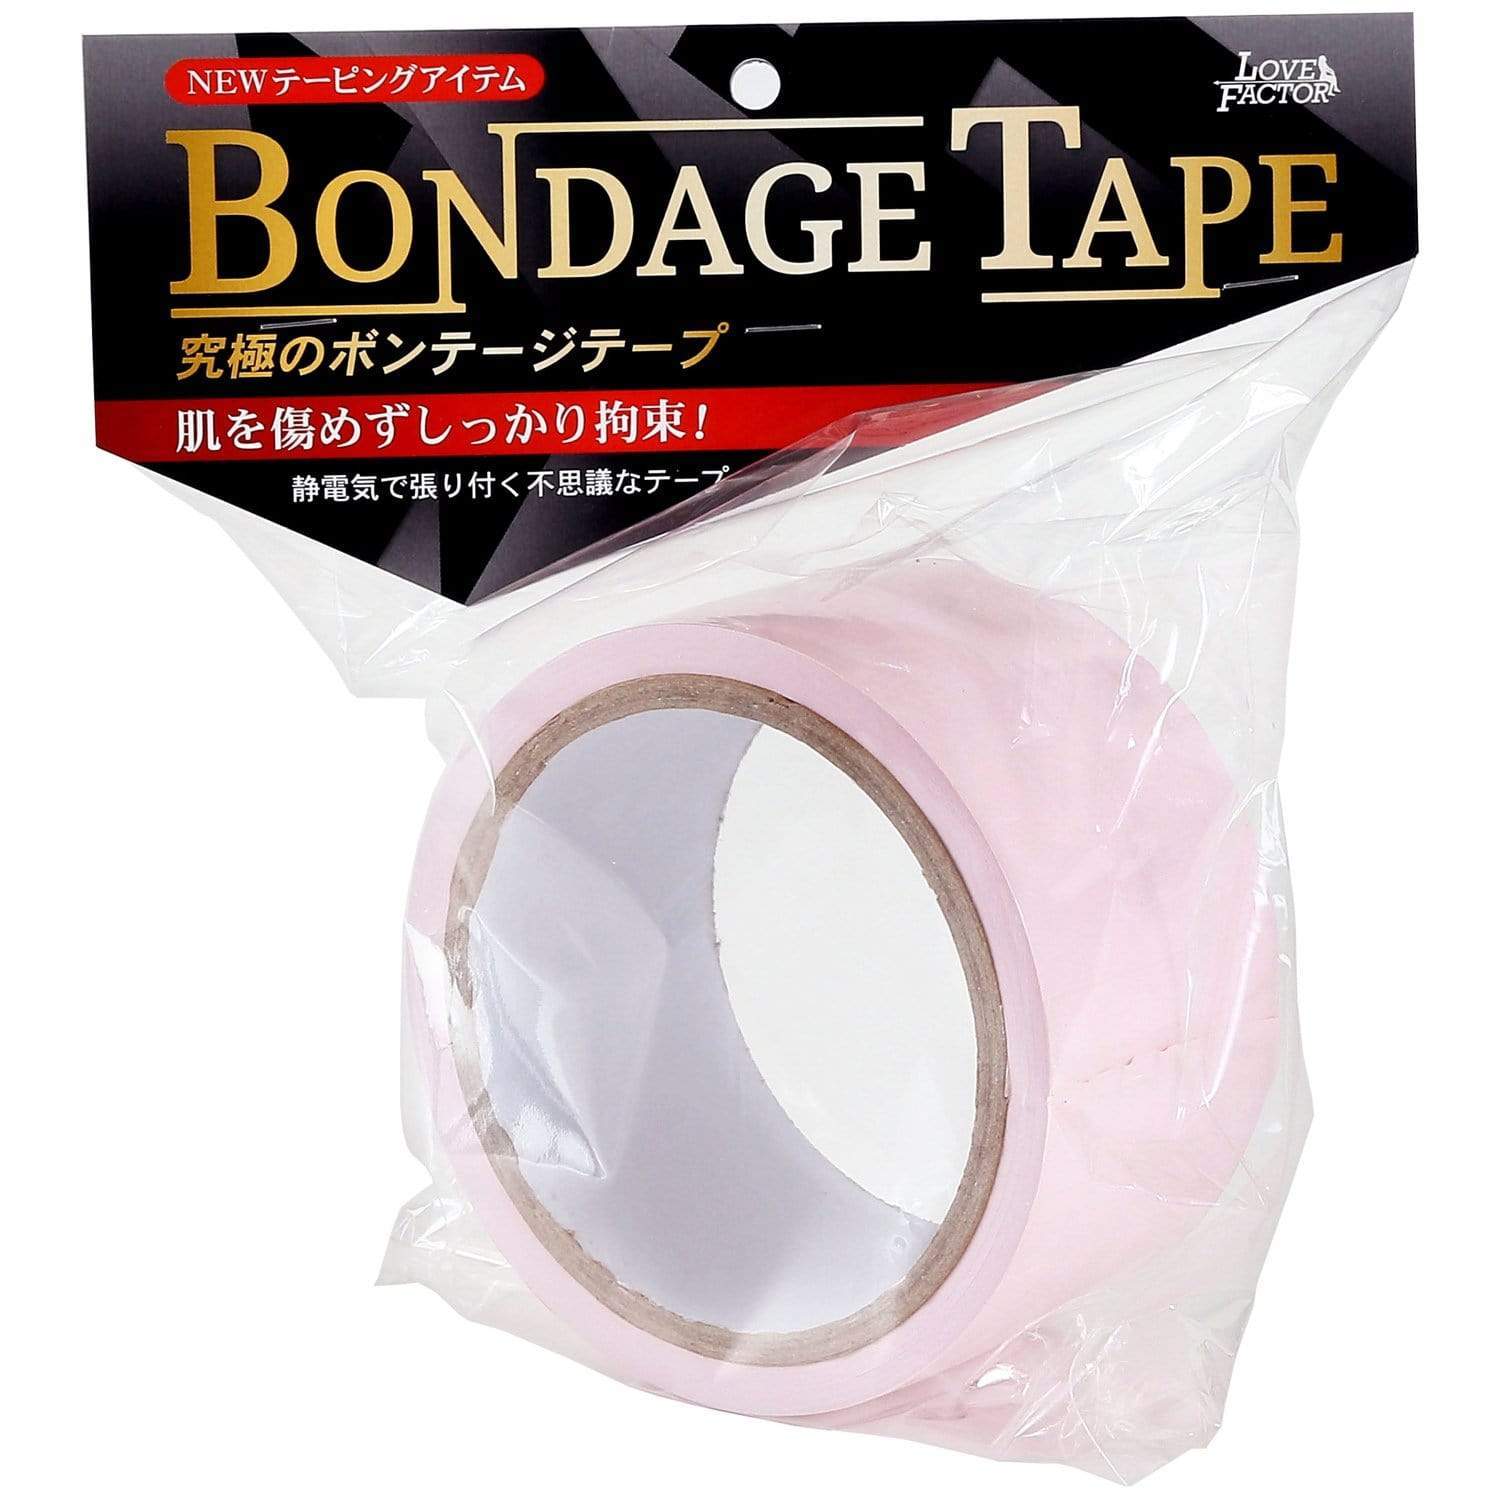 Love Factor - Peach Bondage Tape 20m (Pink) BDSM Tape